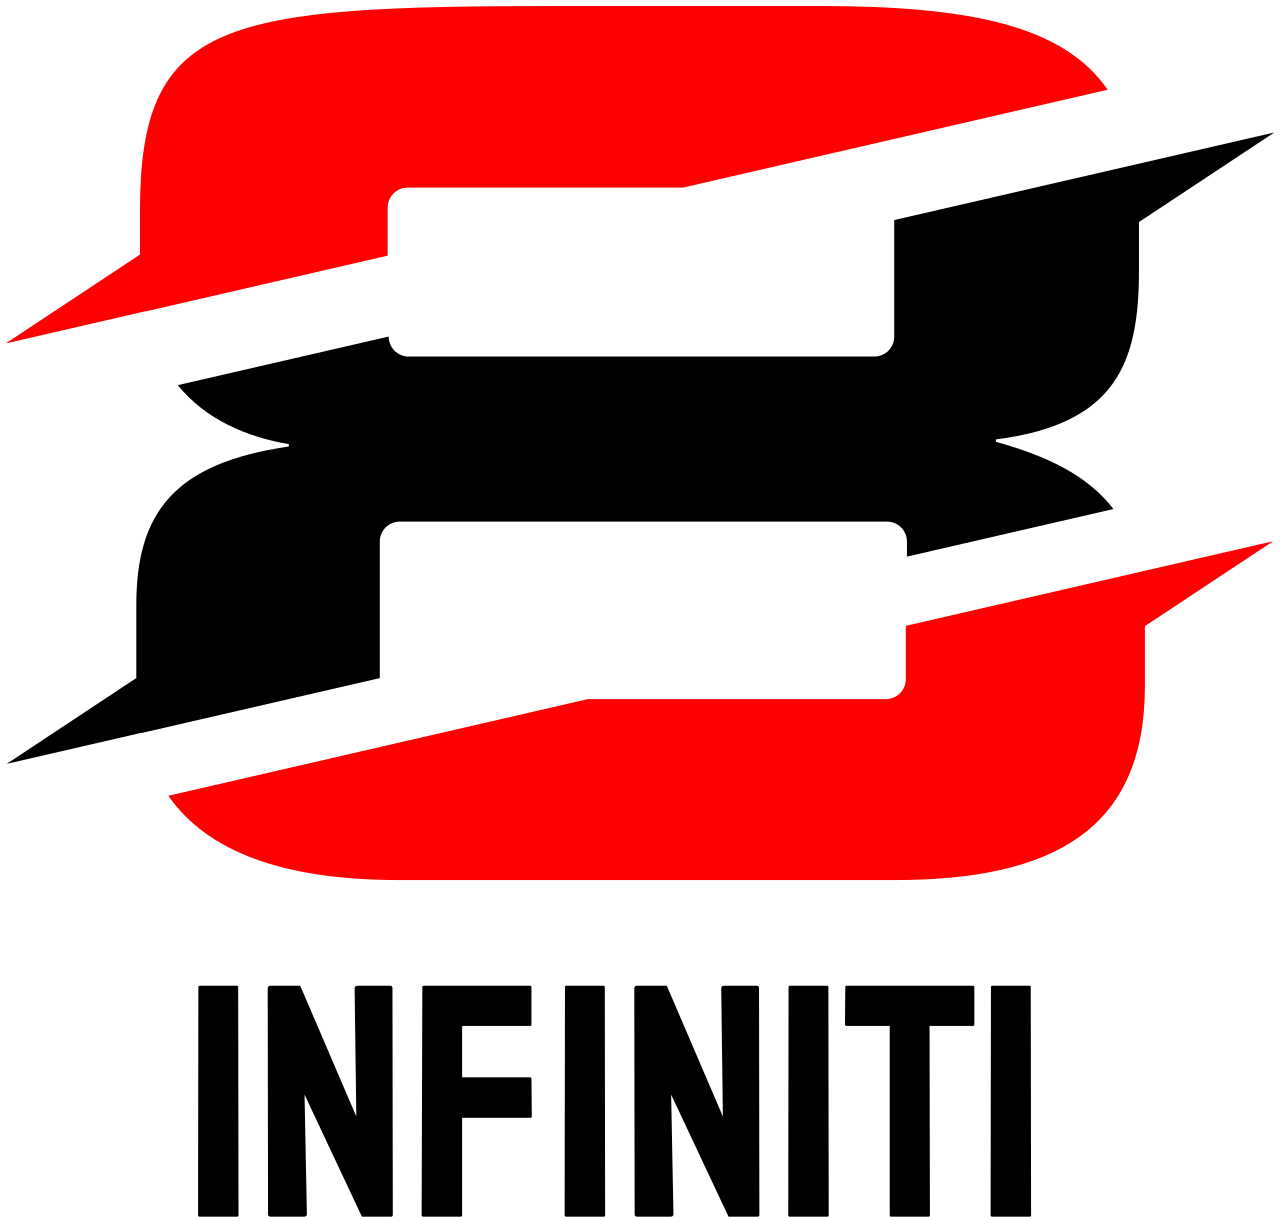 Infiniti 's logo